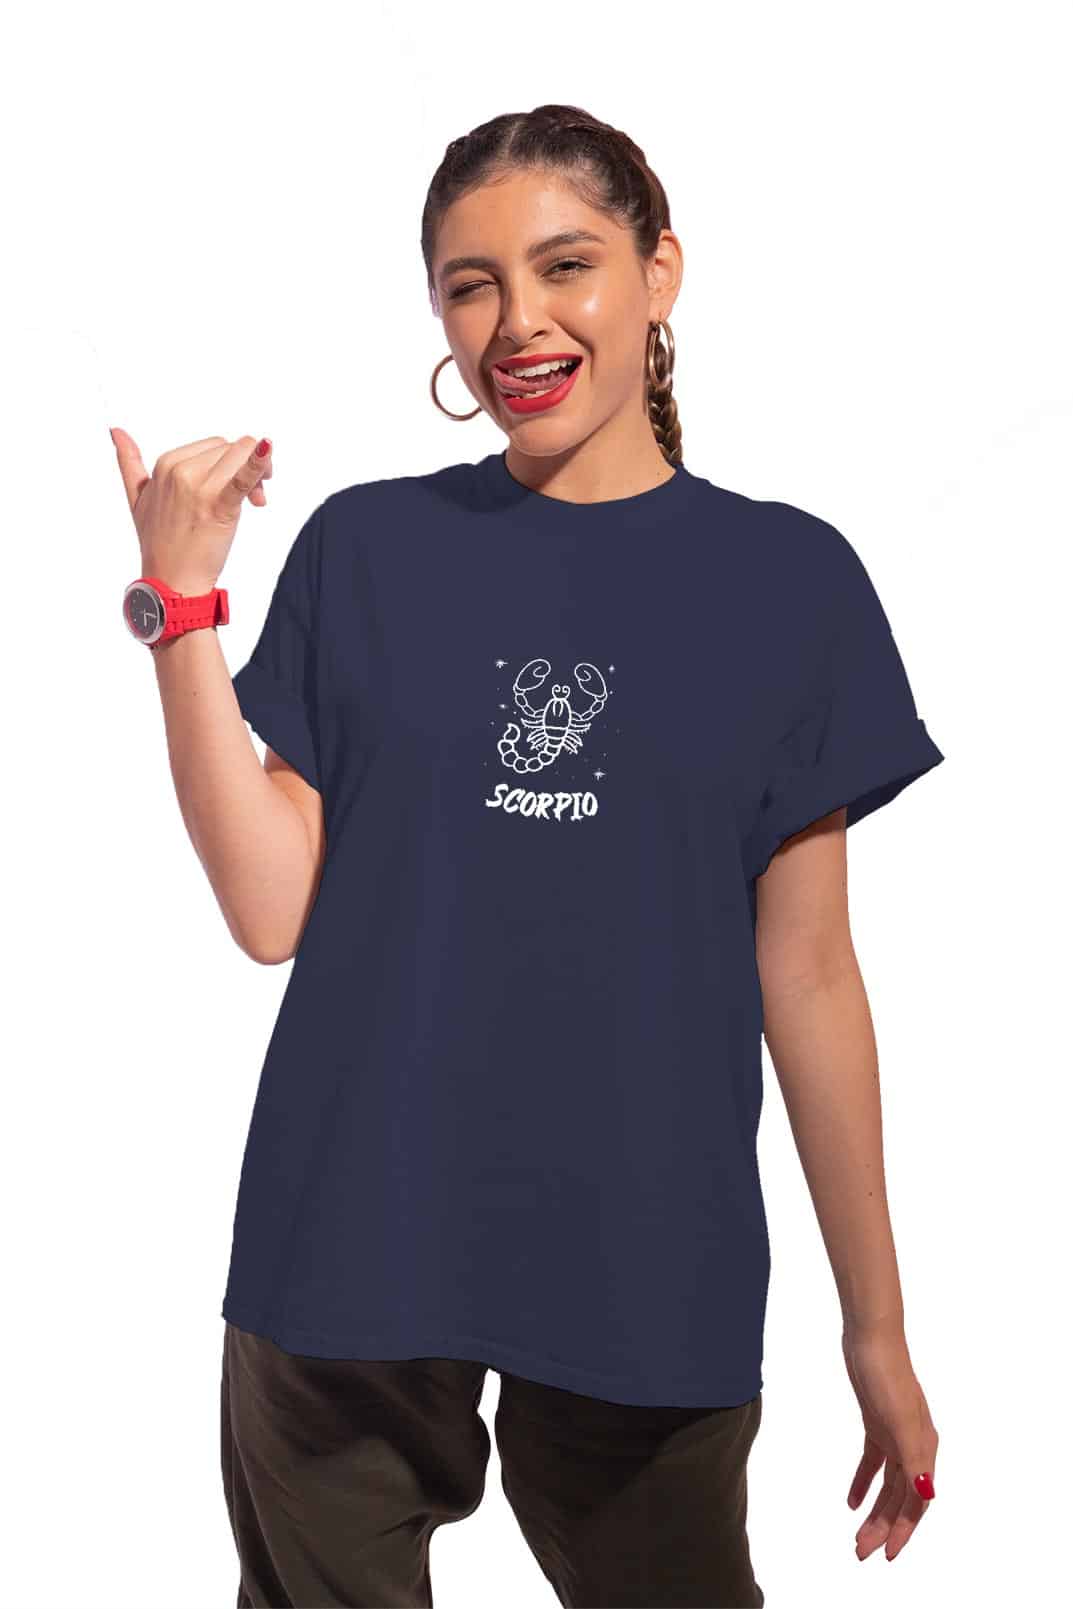 Medle Trendy THE SCORPIO Unisex T-shirt | Chic & Cool Cotton Tee ...